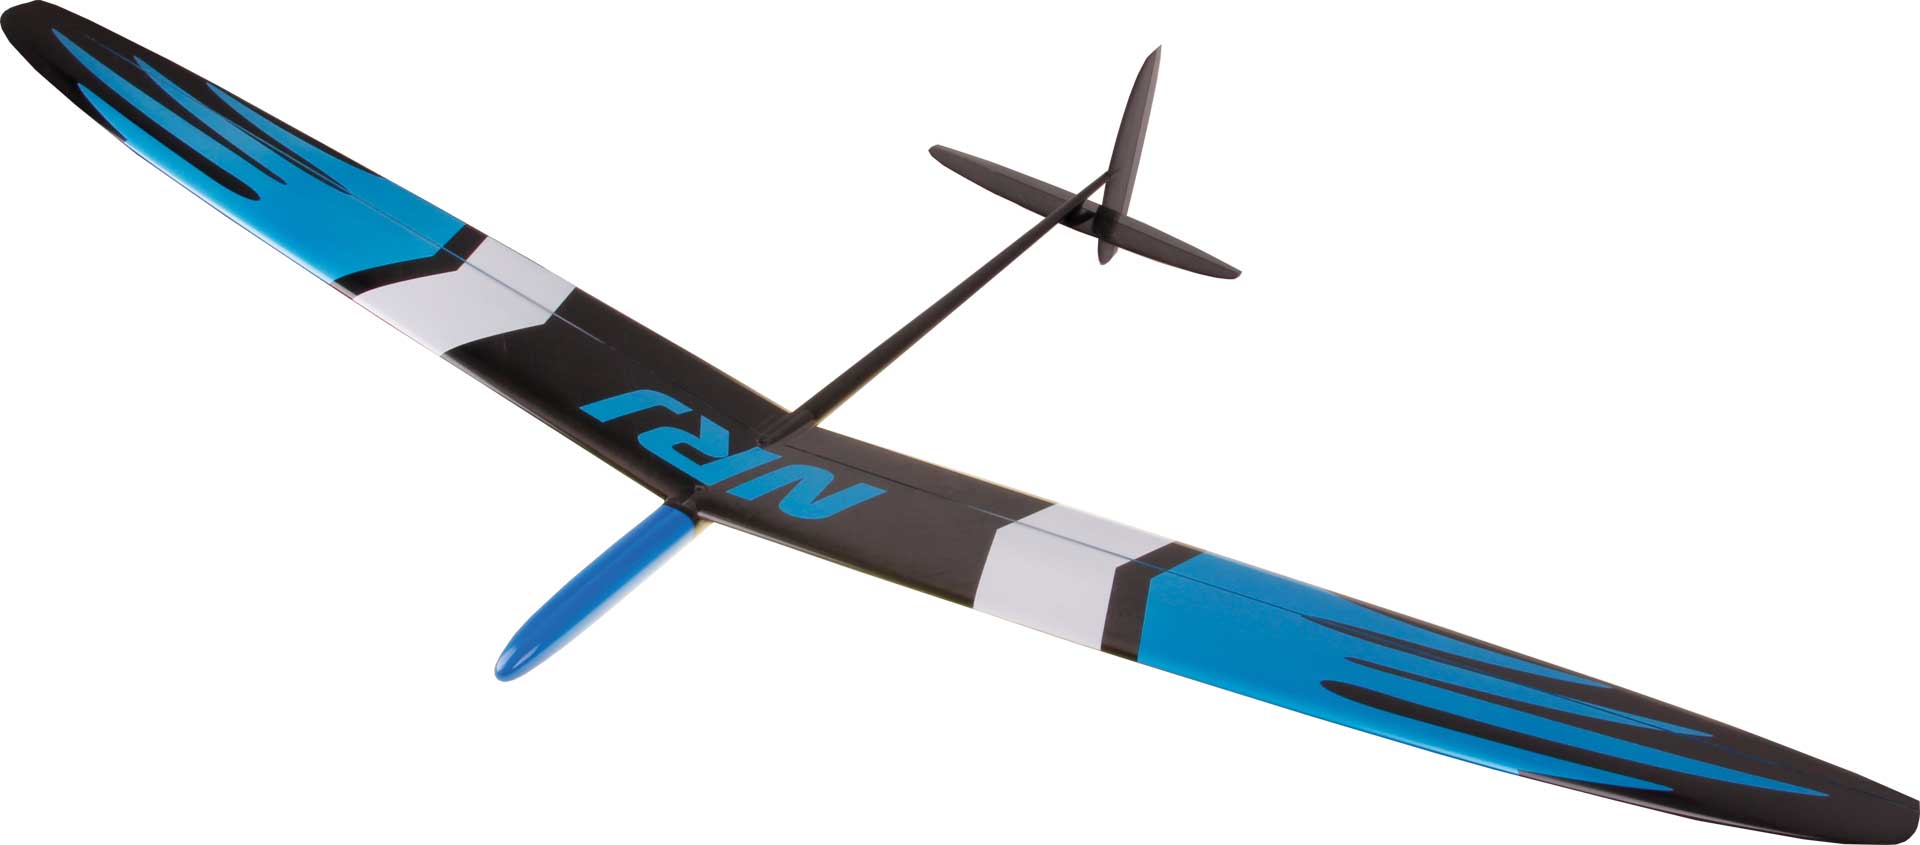 OA-Composites NRJ F3K BLAU # 5 "spread tow 60" Discus Launch Glider DLG